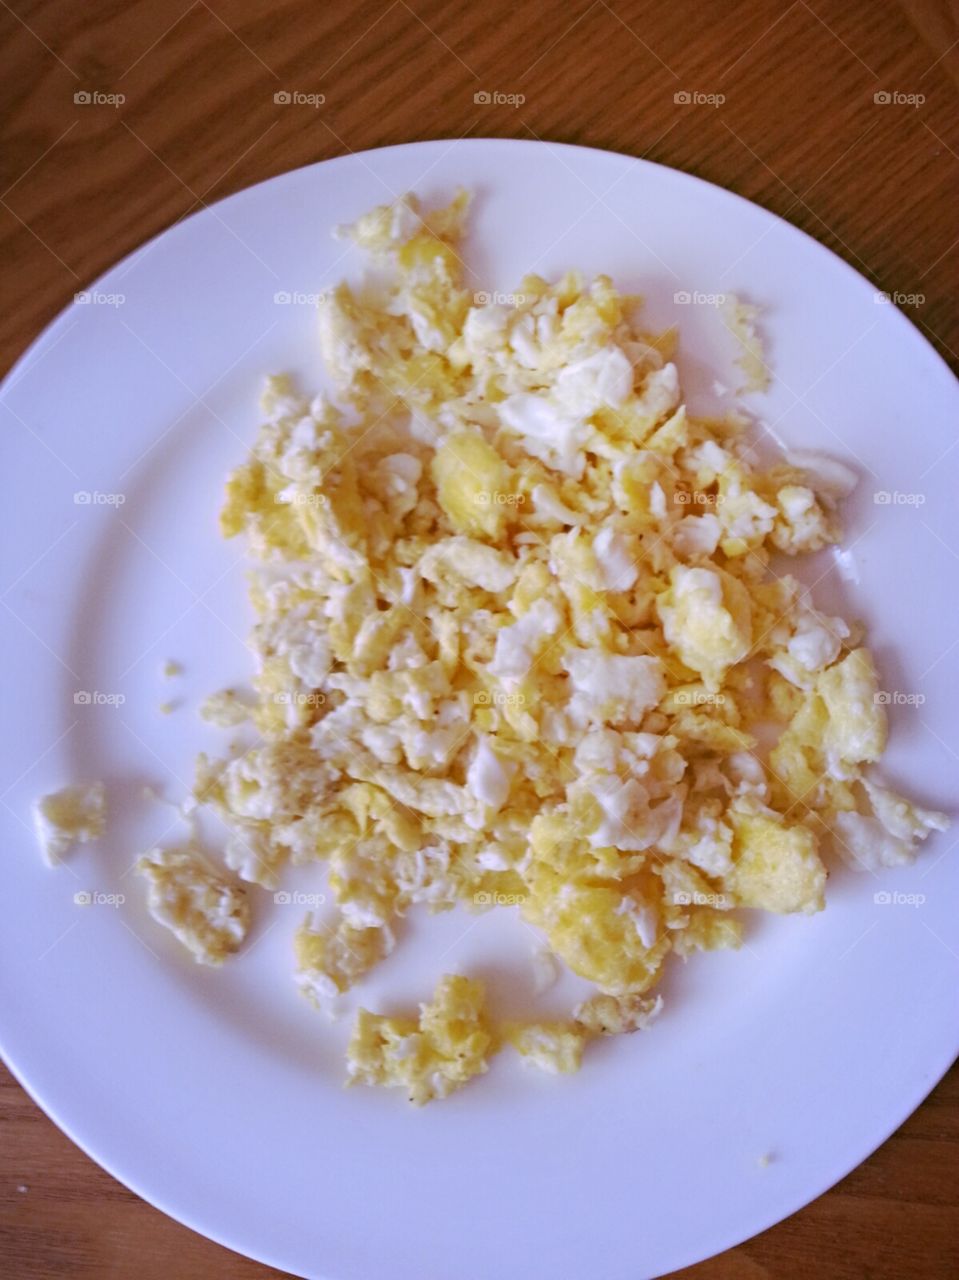 Simple Breakfast. eggs, just eggs